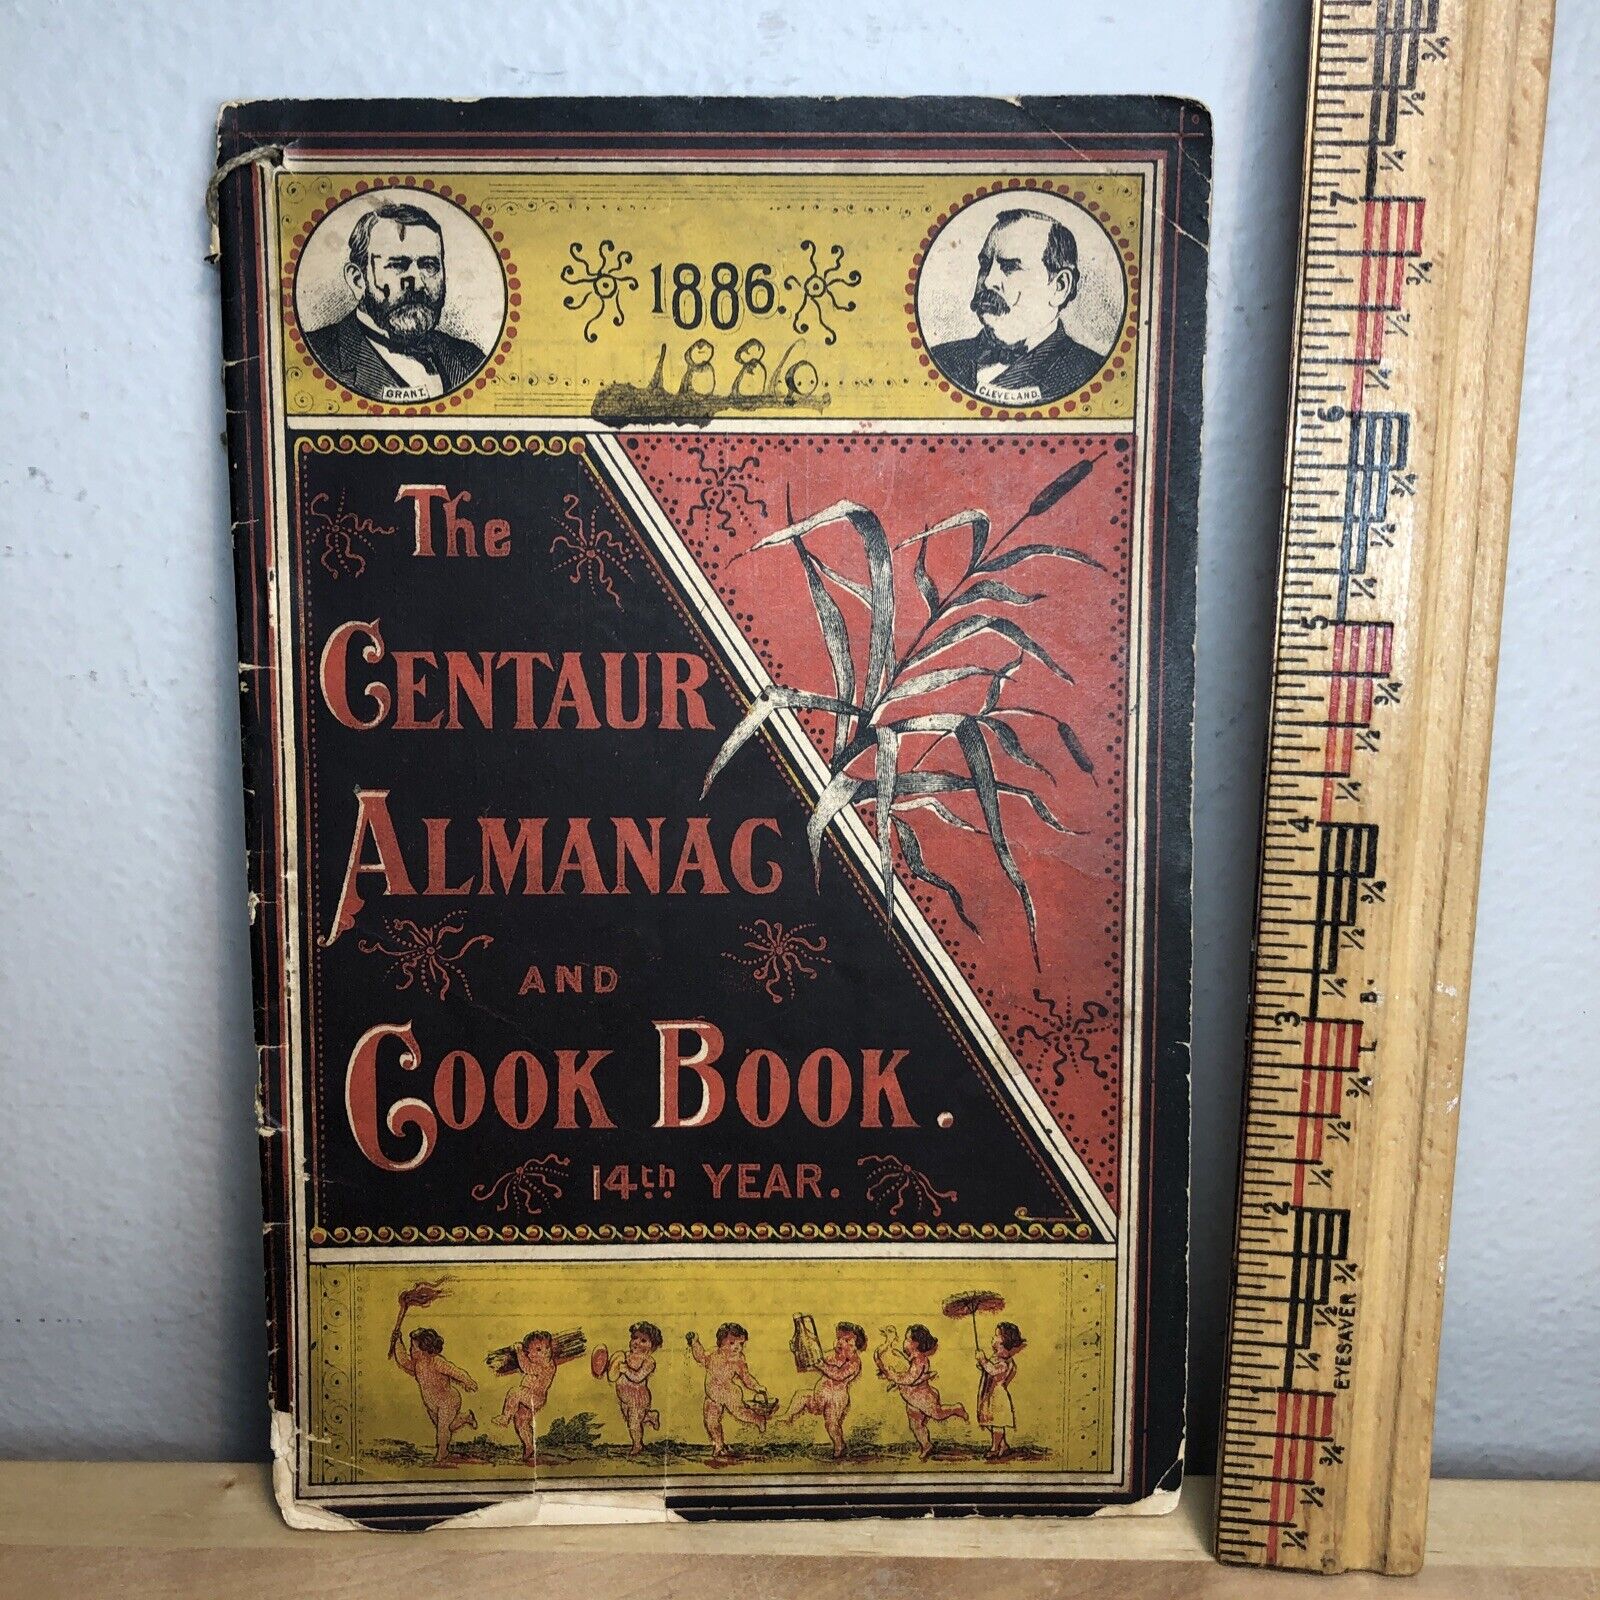 THE CENTAUR ALMANAC AND COOK BOOK. 14TH YEAR, PB, 1886, antique, staple binding